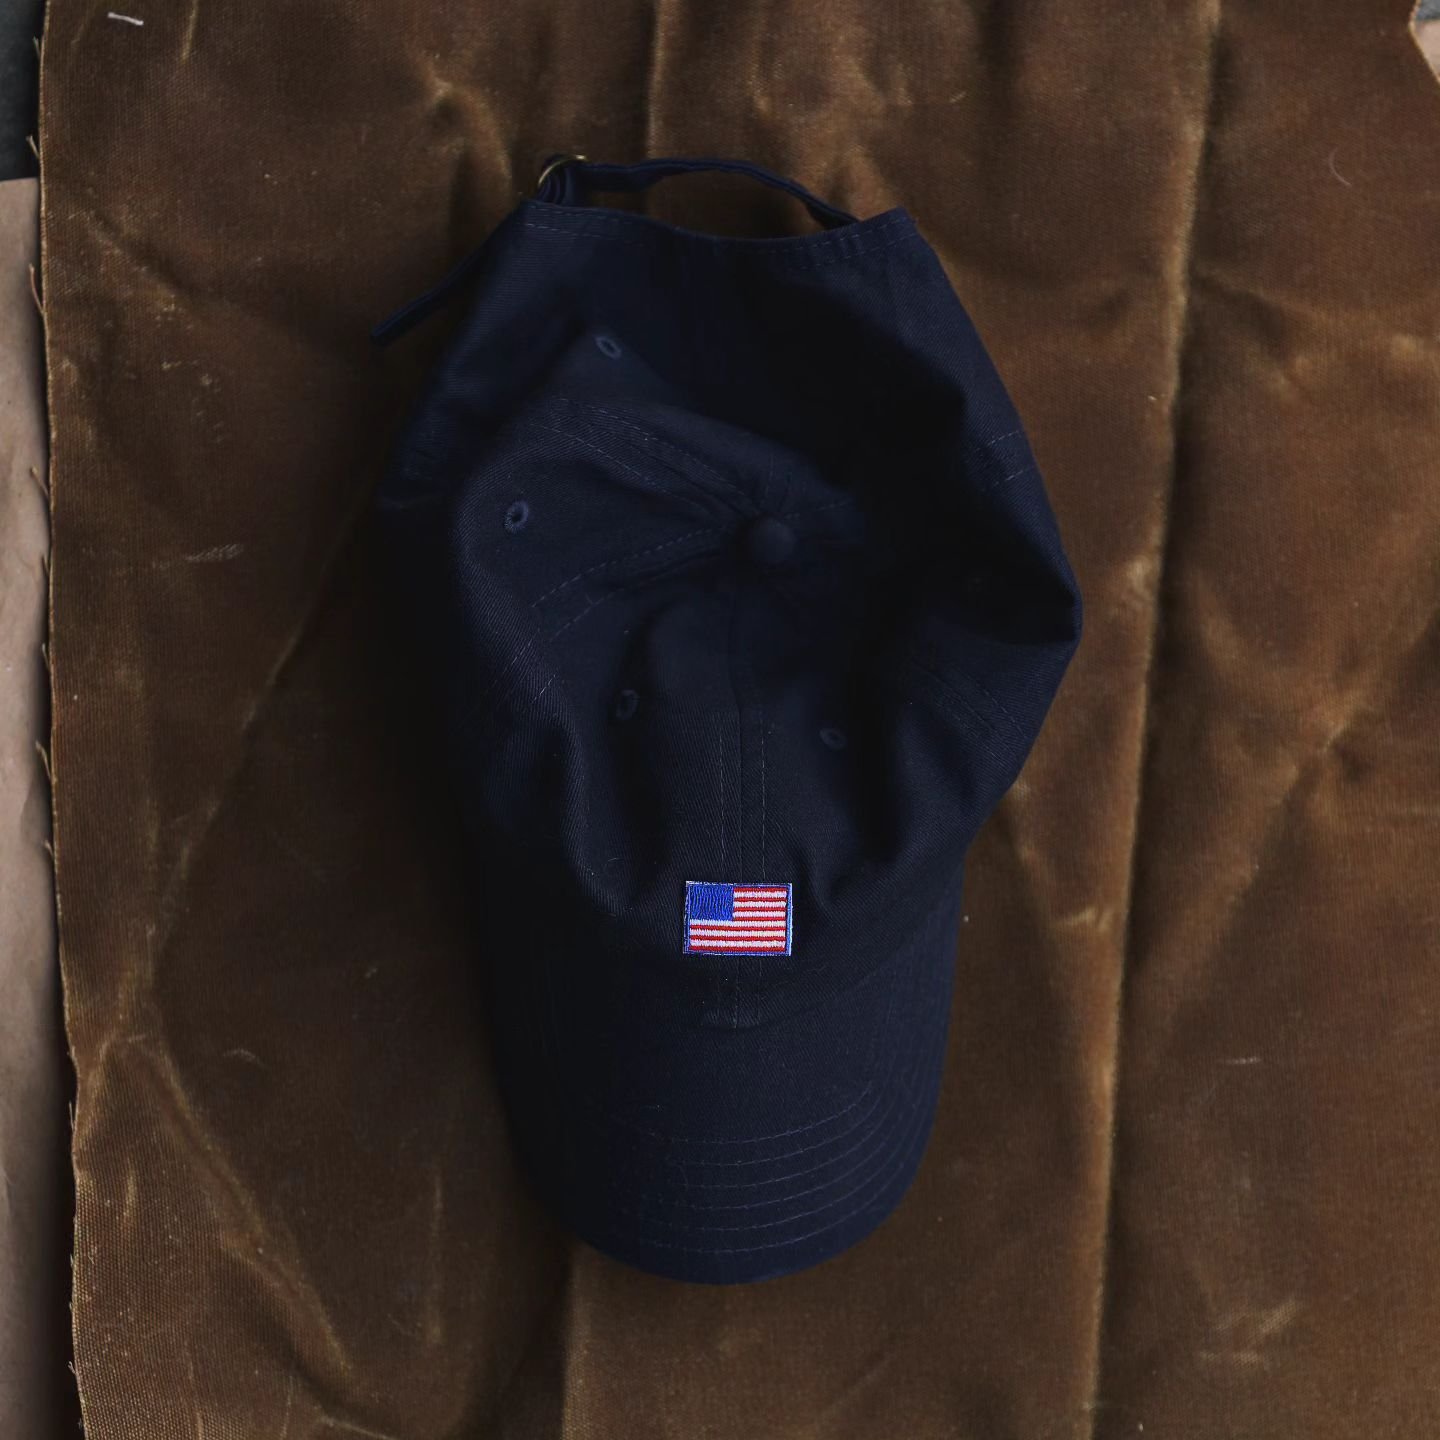 🇺🇲
.
.
.
#headwear #hat #hats #americana #american #ballcap #hatgame